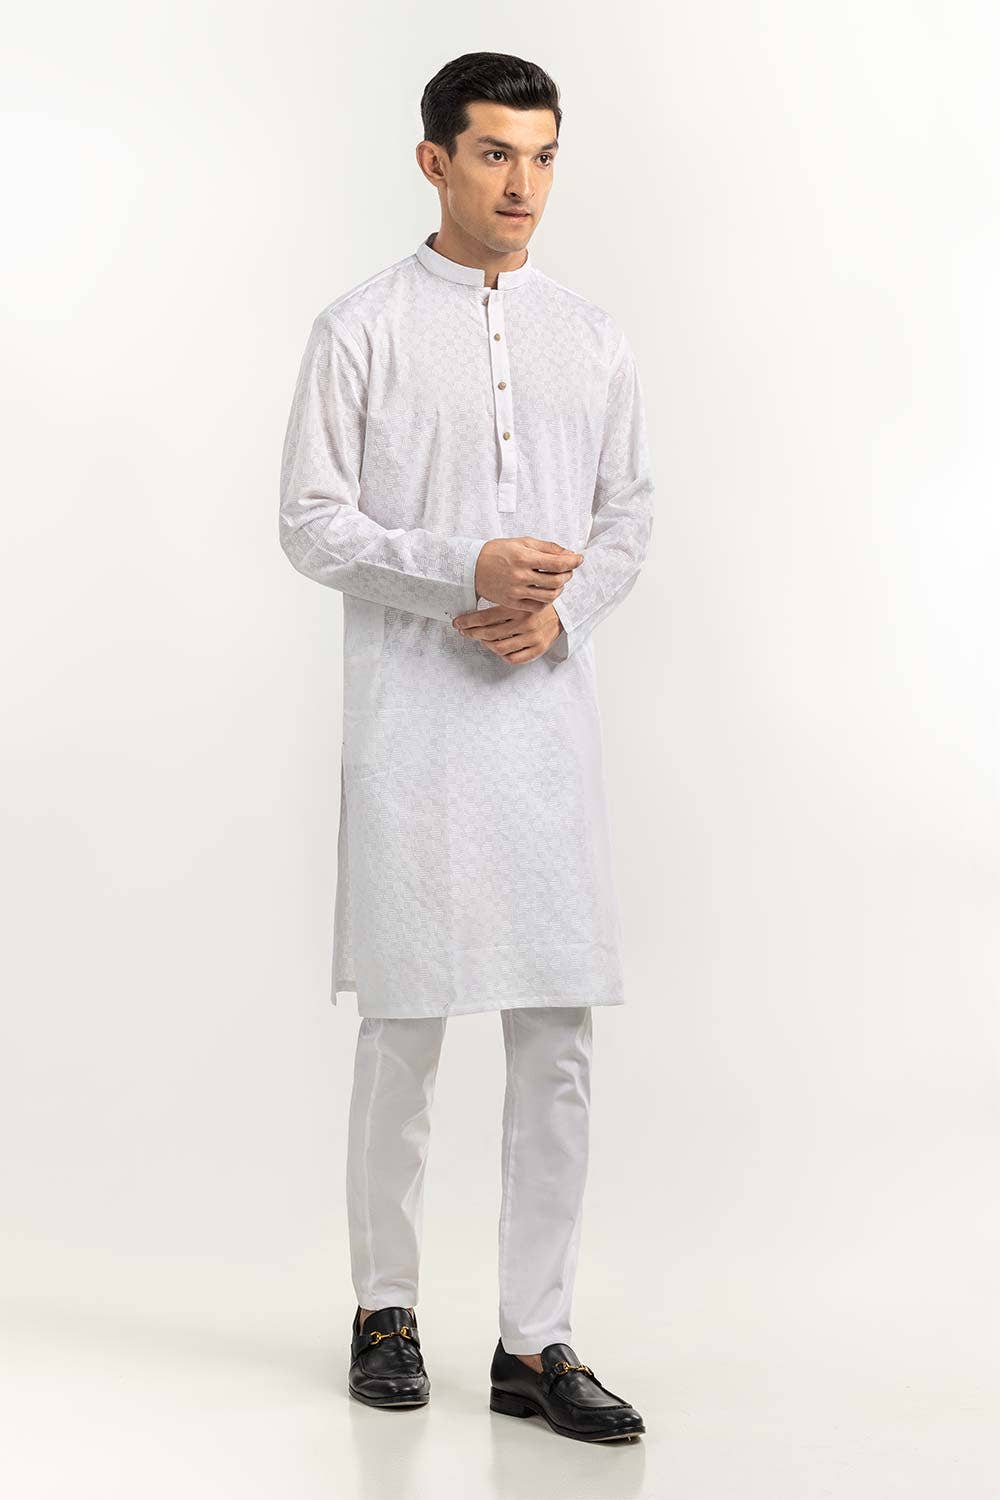 Gul Ahmed Ready to Wear White Basic Kurta KR-PLN22-053